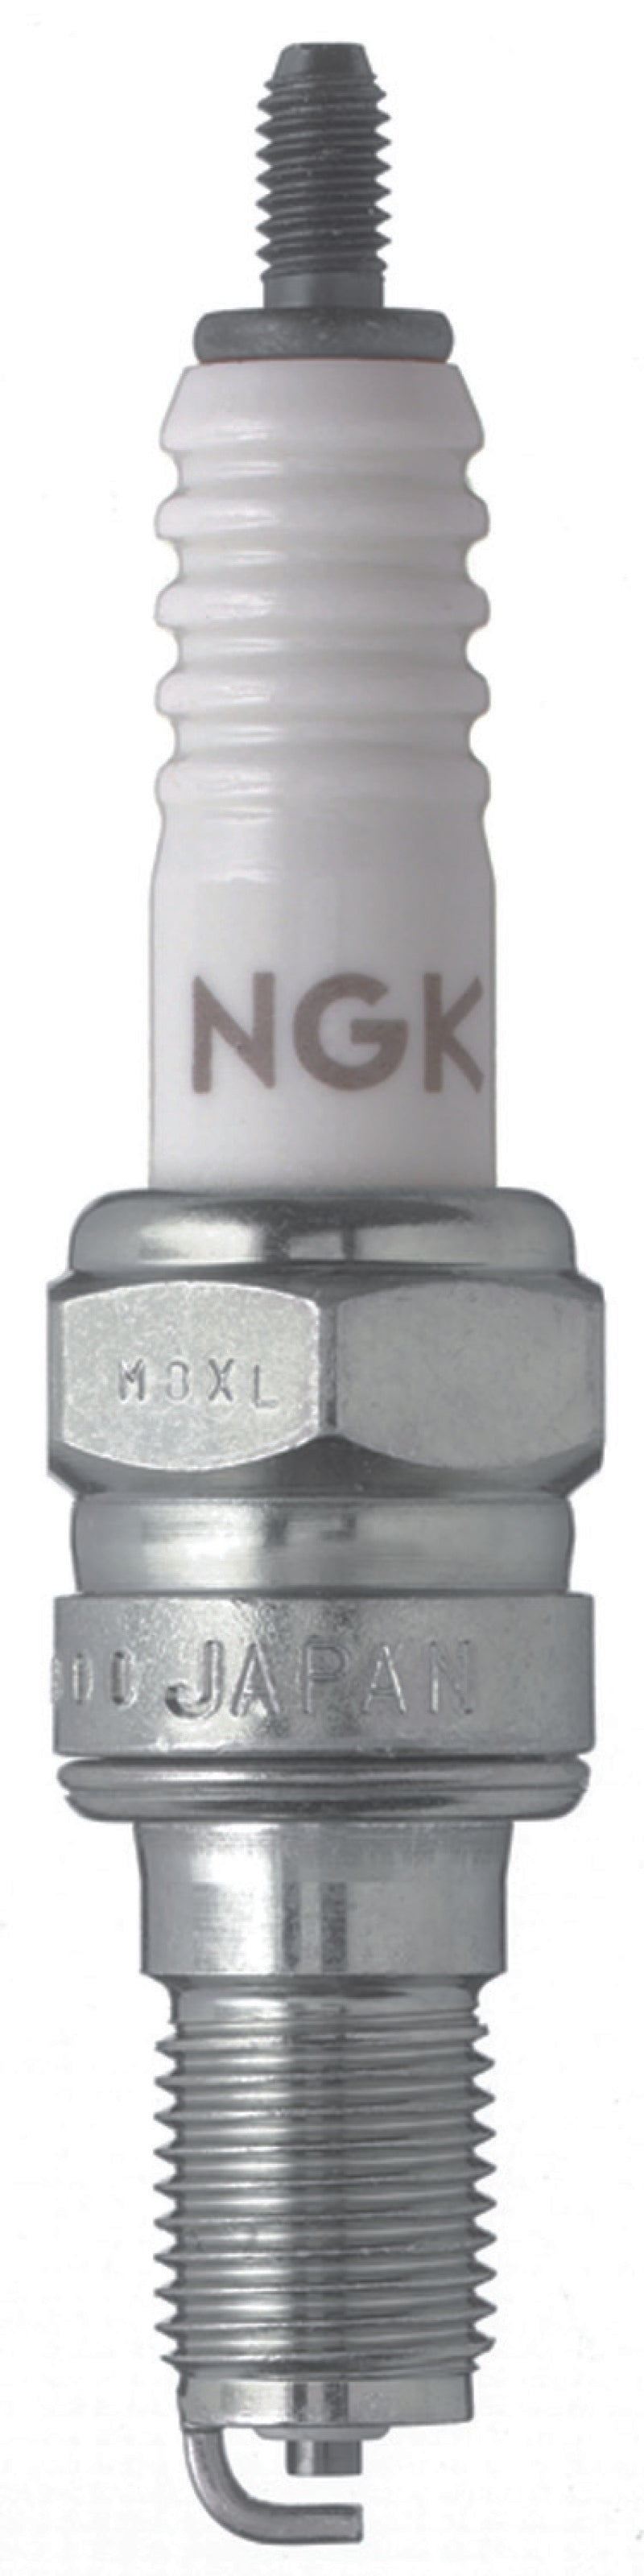 NGK Standard Spark Plug Box of 10 (C8EH-9)